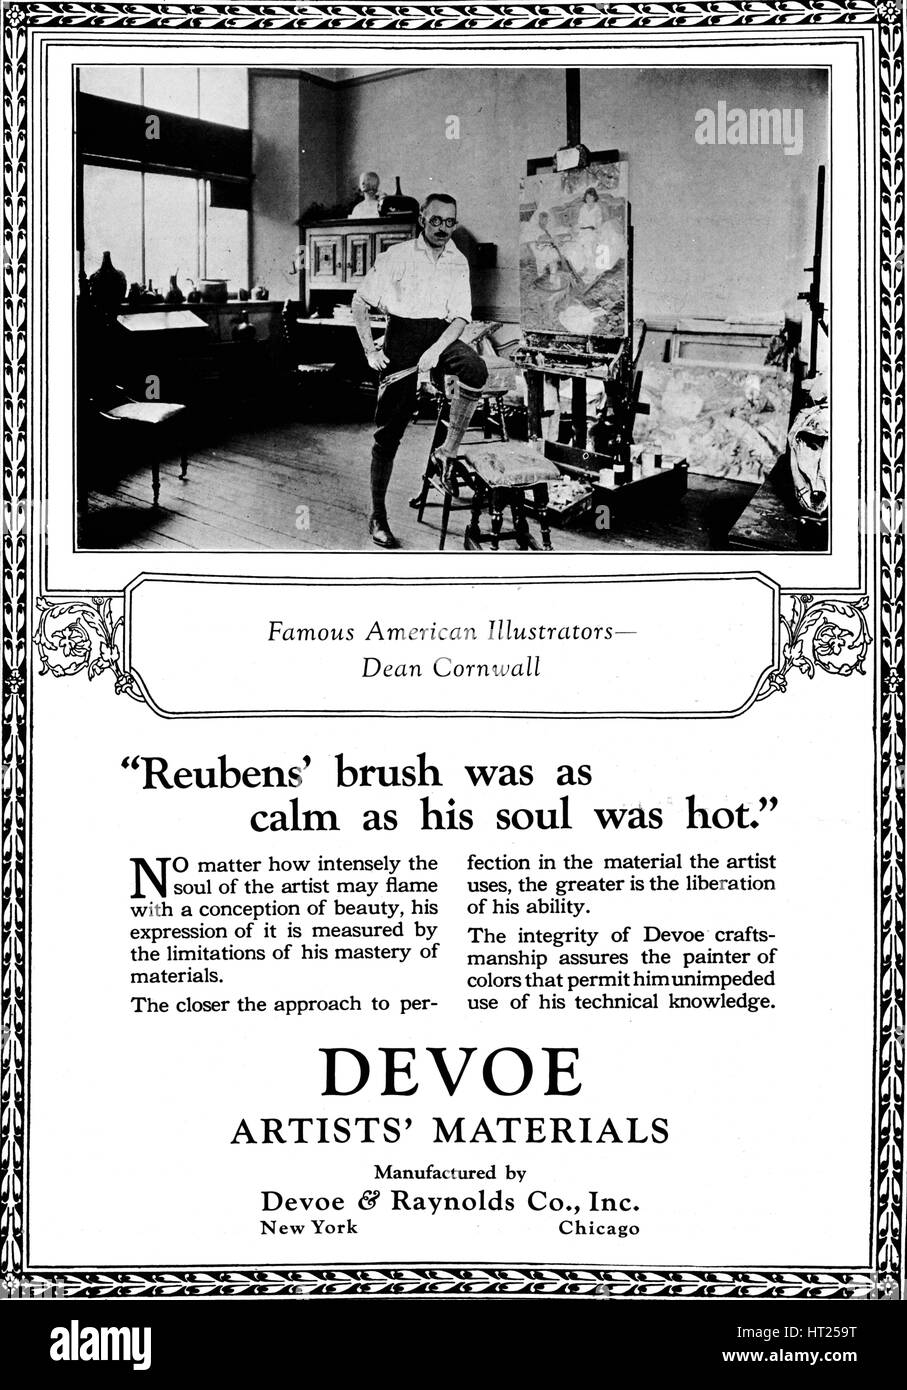 'Devoe Artists' Materials: Famous American Illustrators - Dean Cornwell', c1923, (1923). Artist: Unknown. Stock Photo